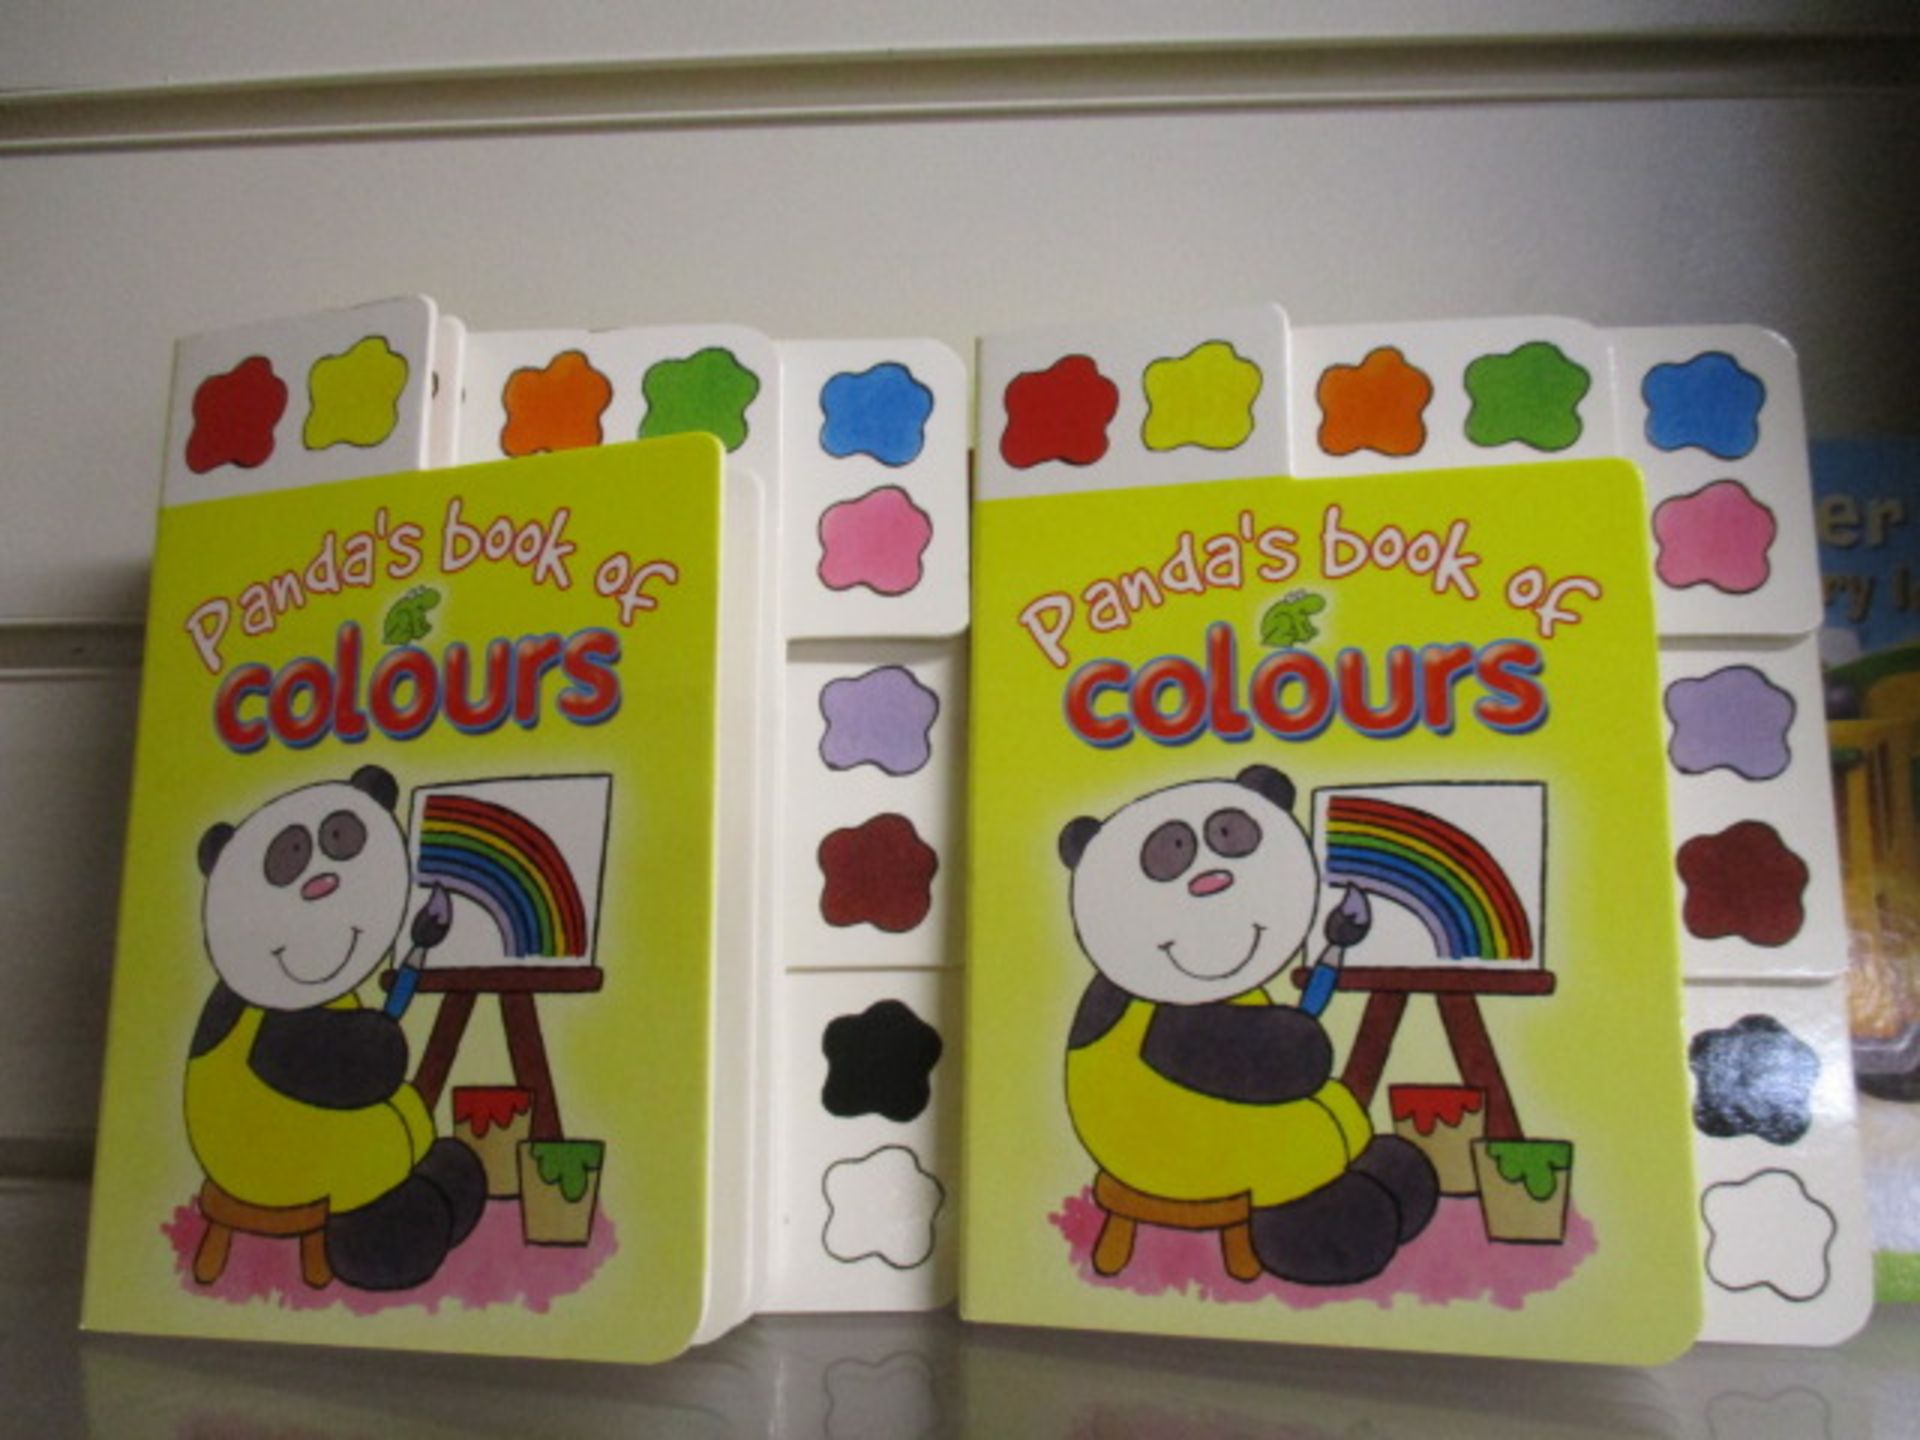 100Pcs X Brand New Kids Colour Activity Book Similar Rrp £2.99 - 100Pcs In Lot